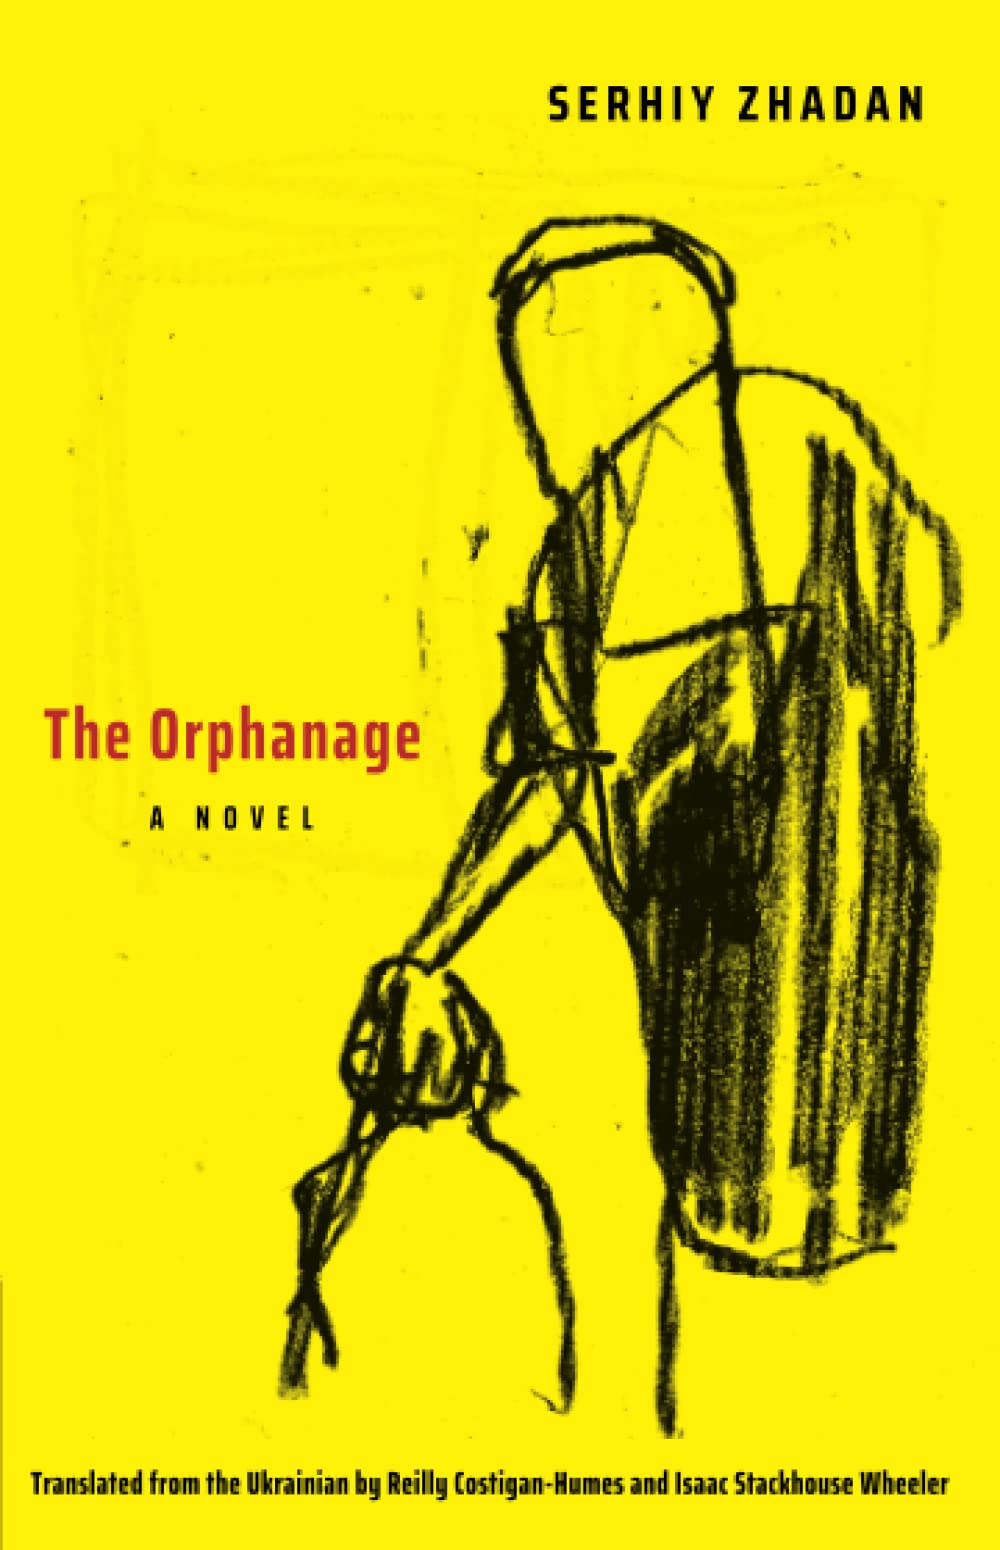 Coperta cărții: The Orphanage - lonnieyoungblood.com